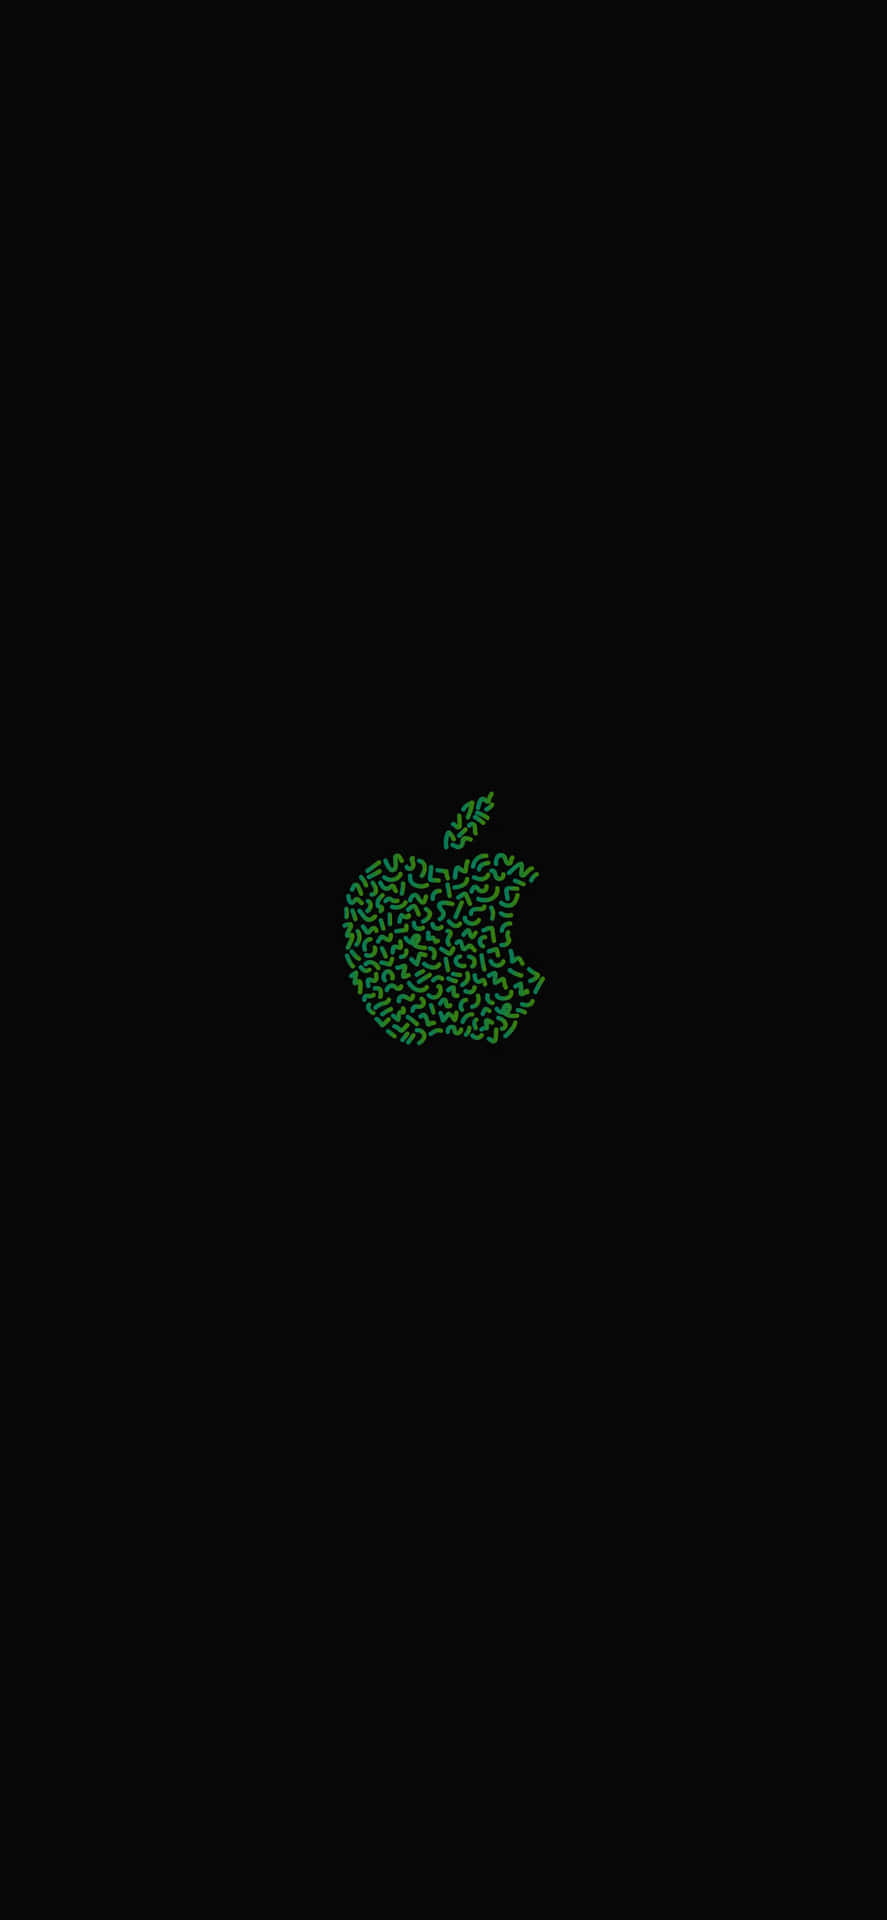 Kollain Den Senaste Olivgröna Apple Iphone Wallpaper